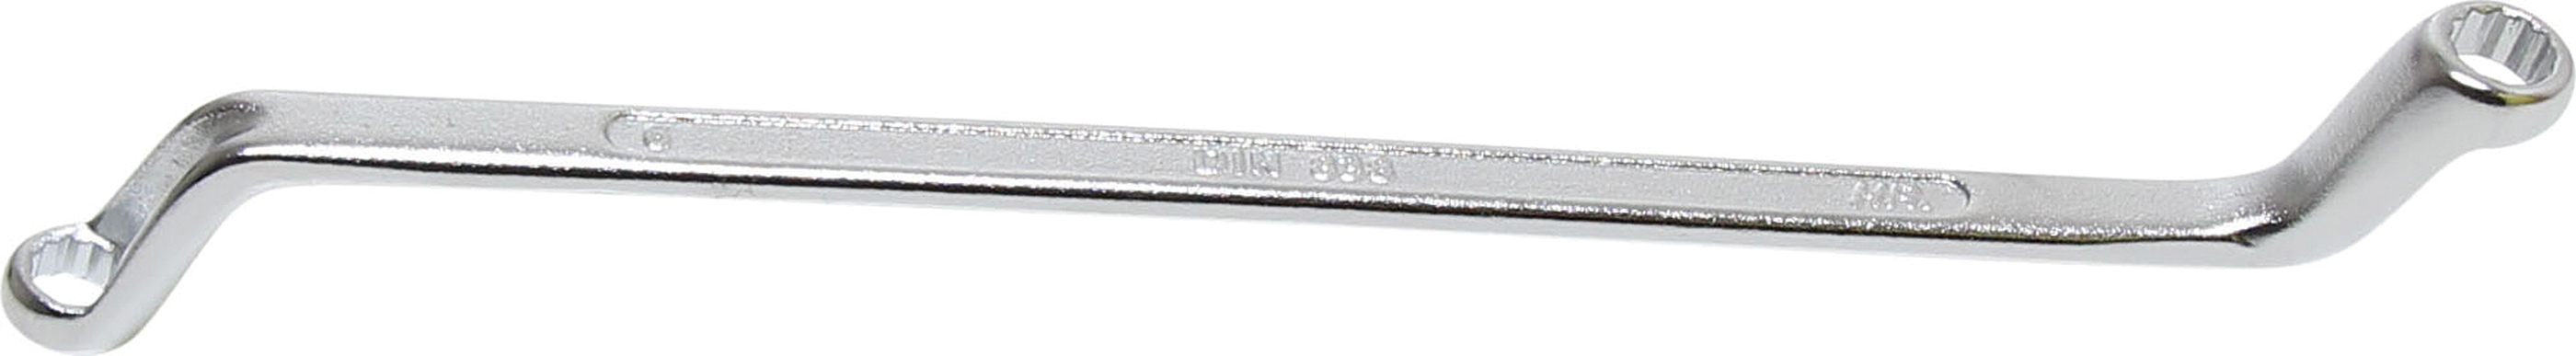 BGS 1214-6x7 Cheie inelara dubla cu cot, 6x7 mm